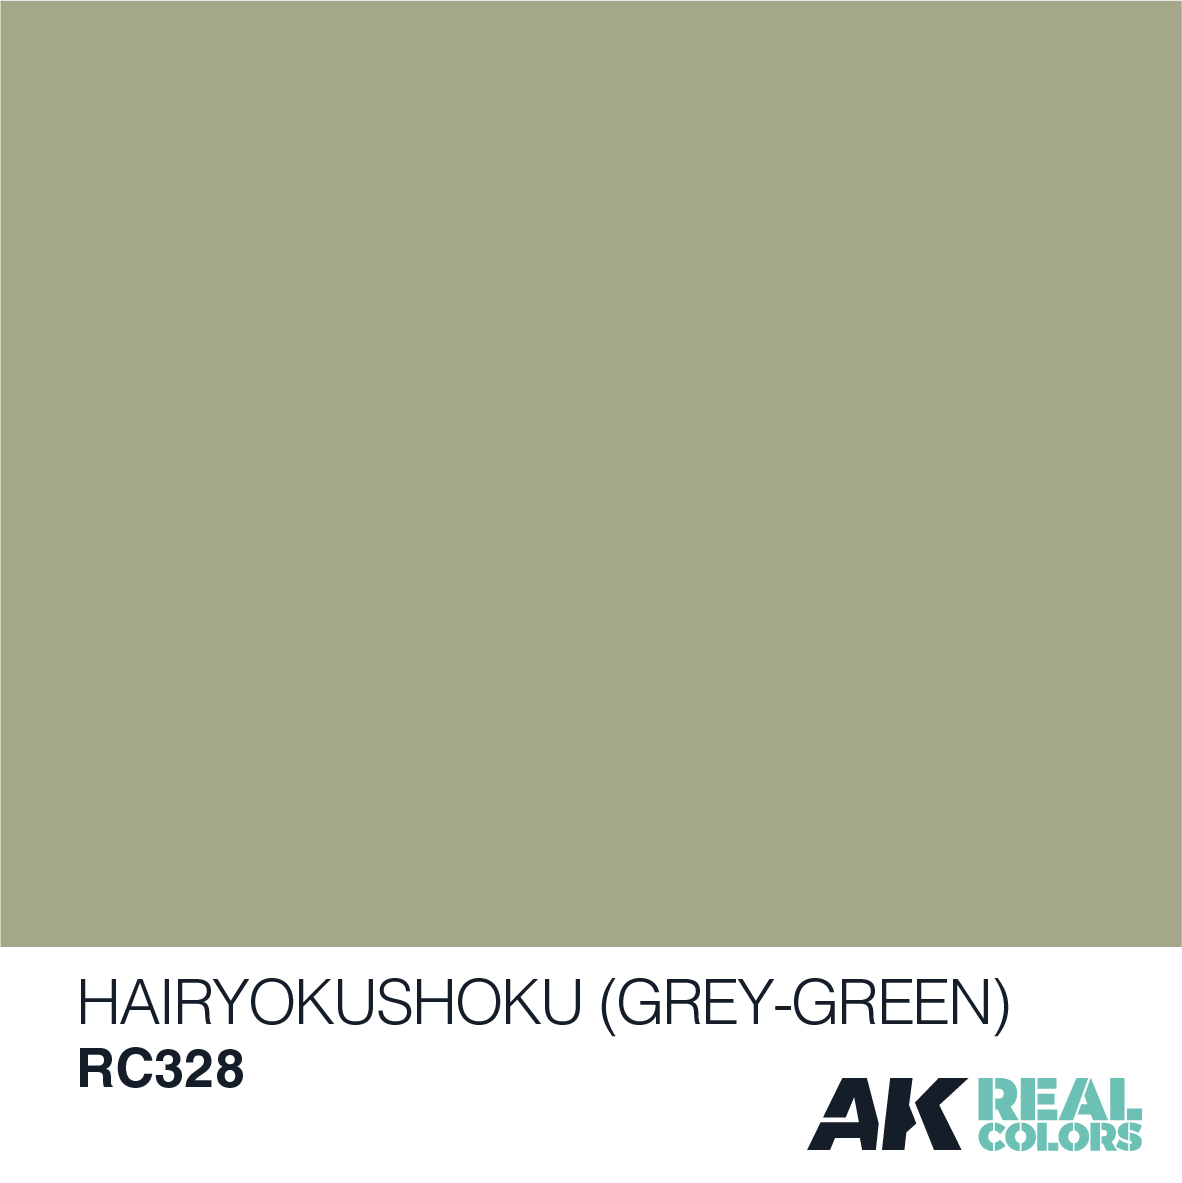 IJA #1 Hairyokushoku (Grey-Green)